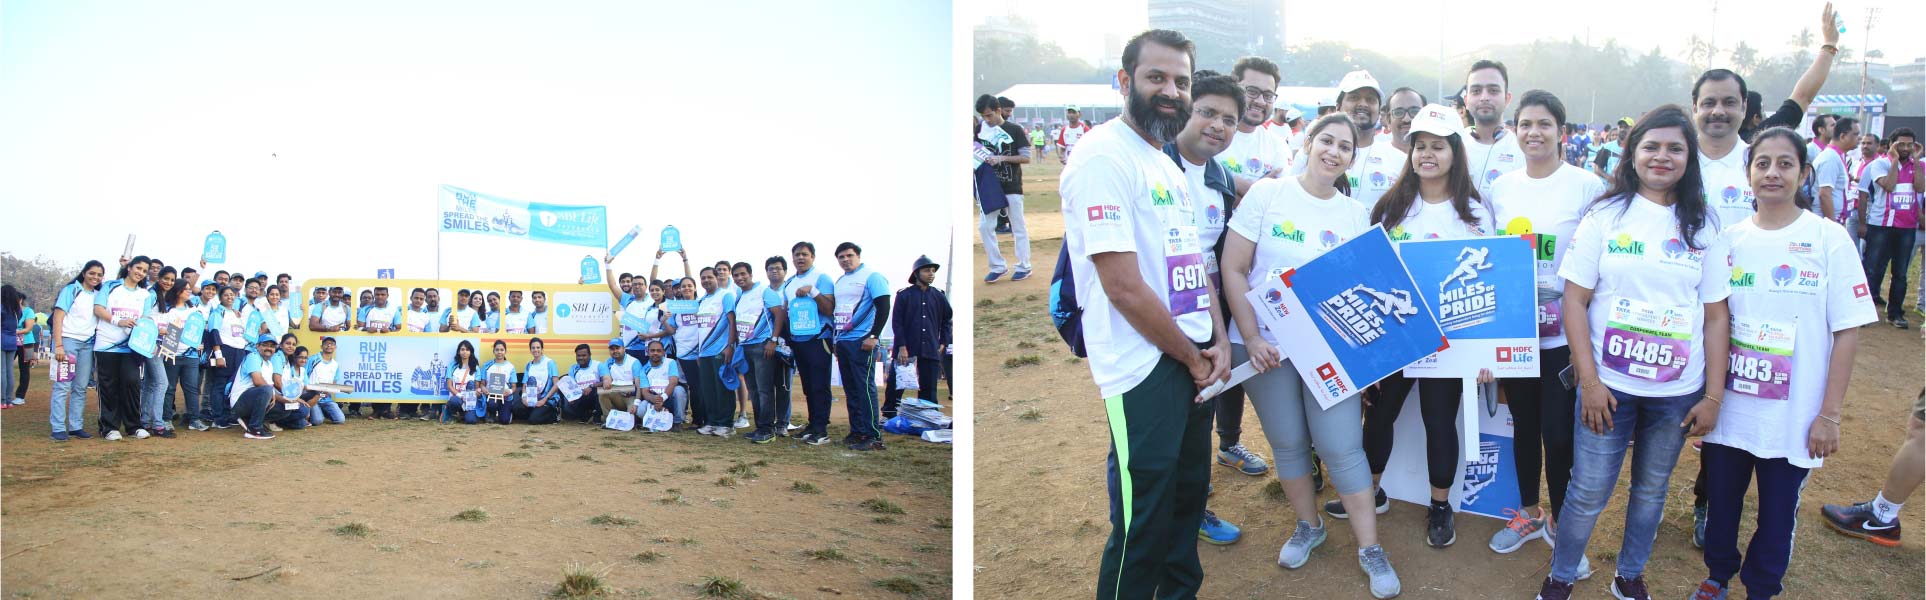 Corporate and Youth run for child education at Tata Mumbai Marathon 2018